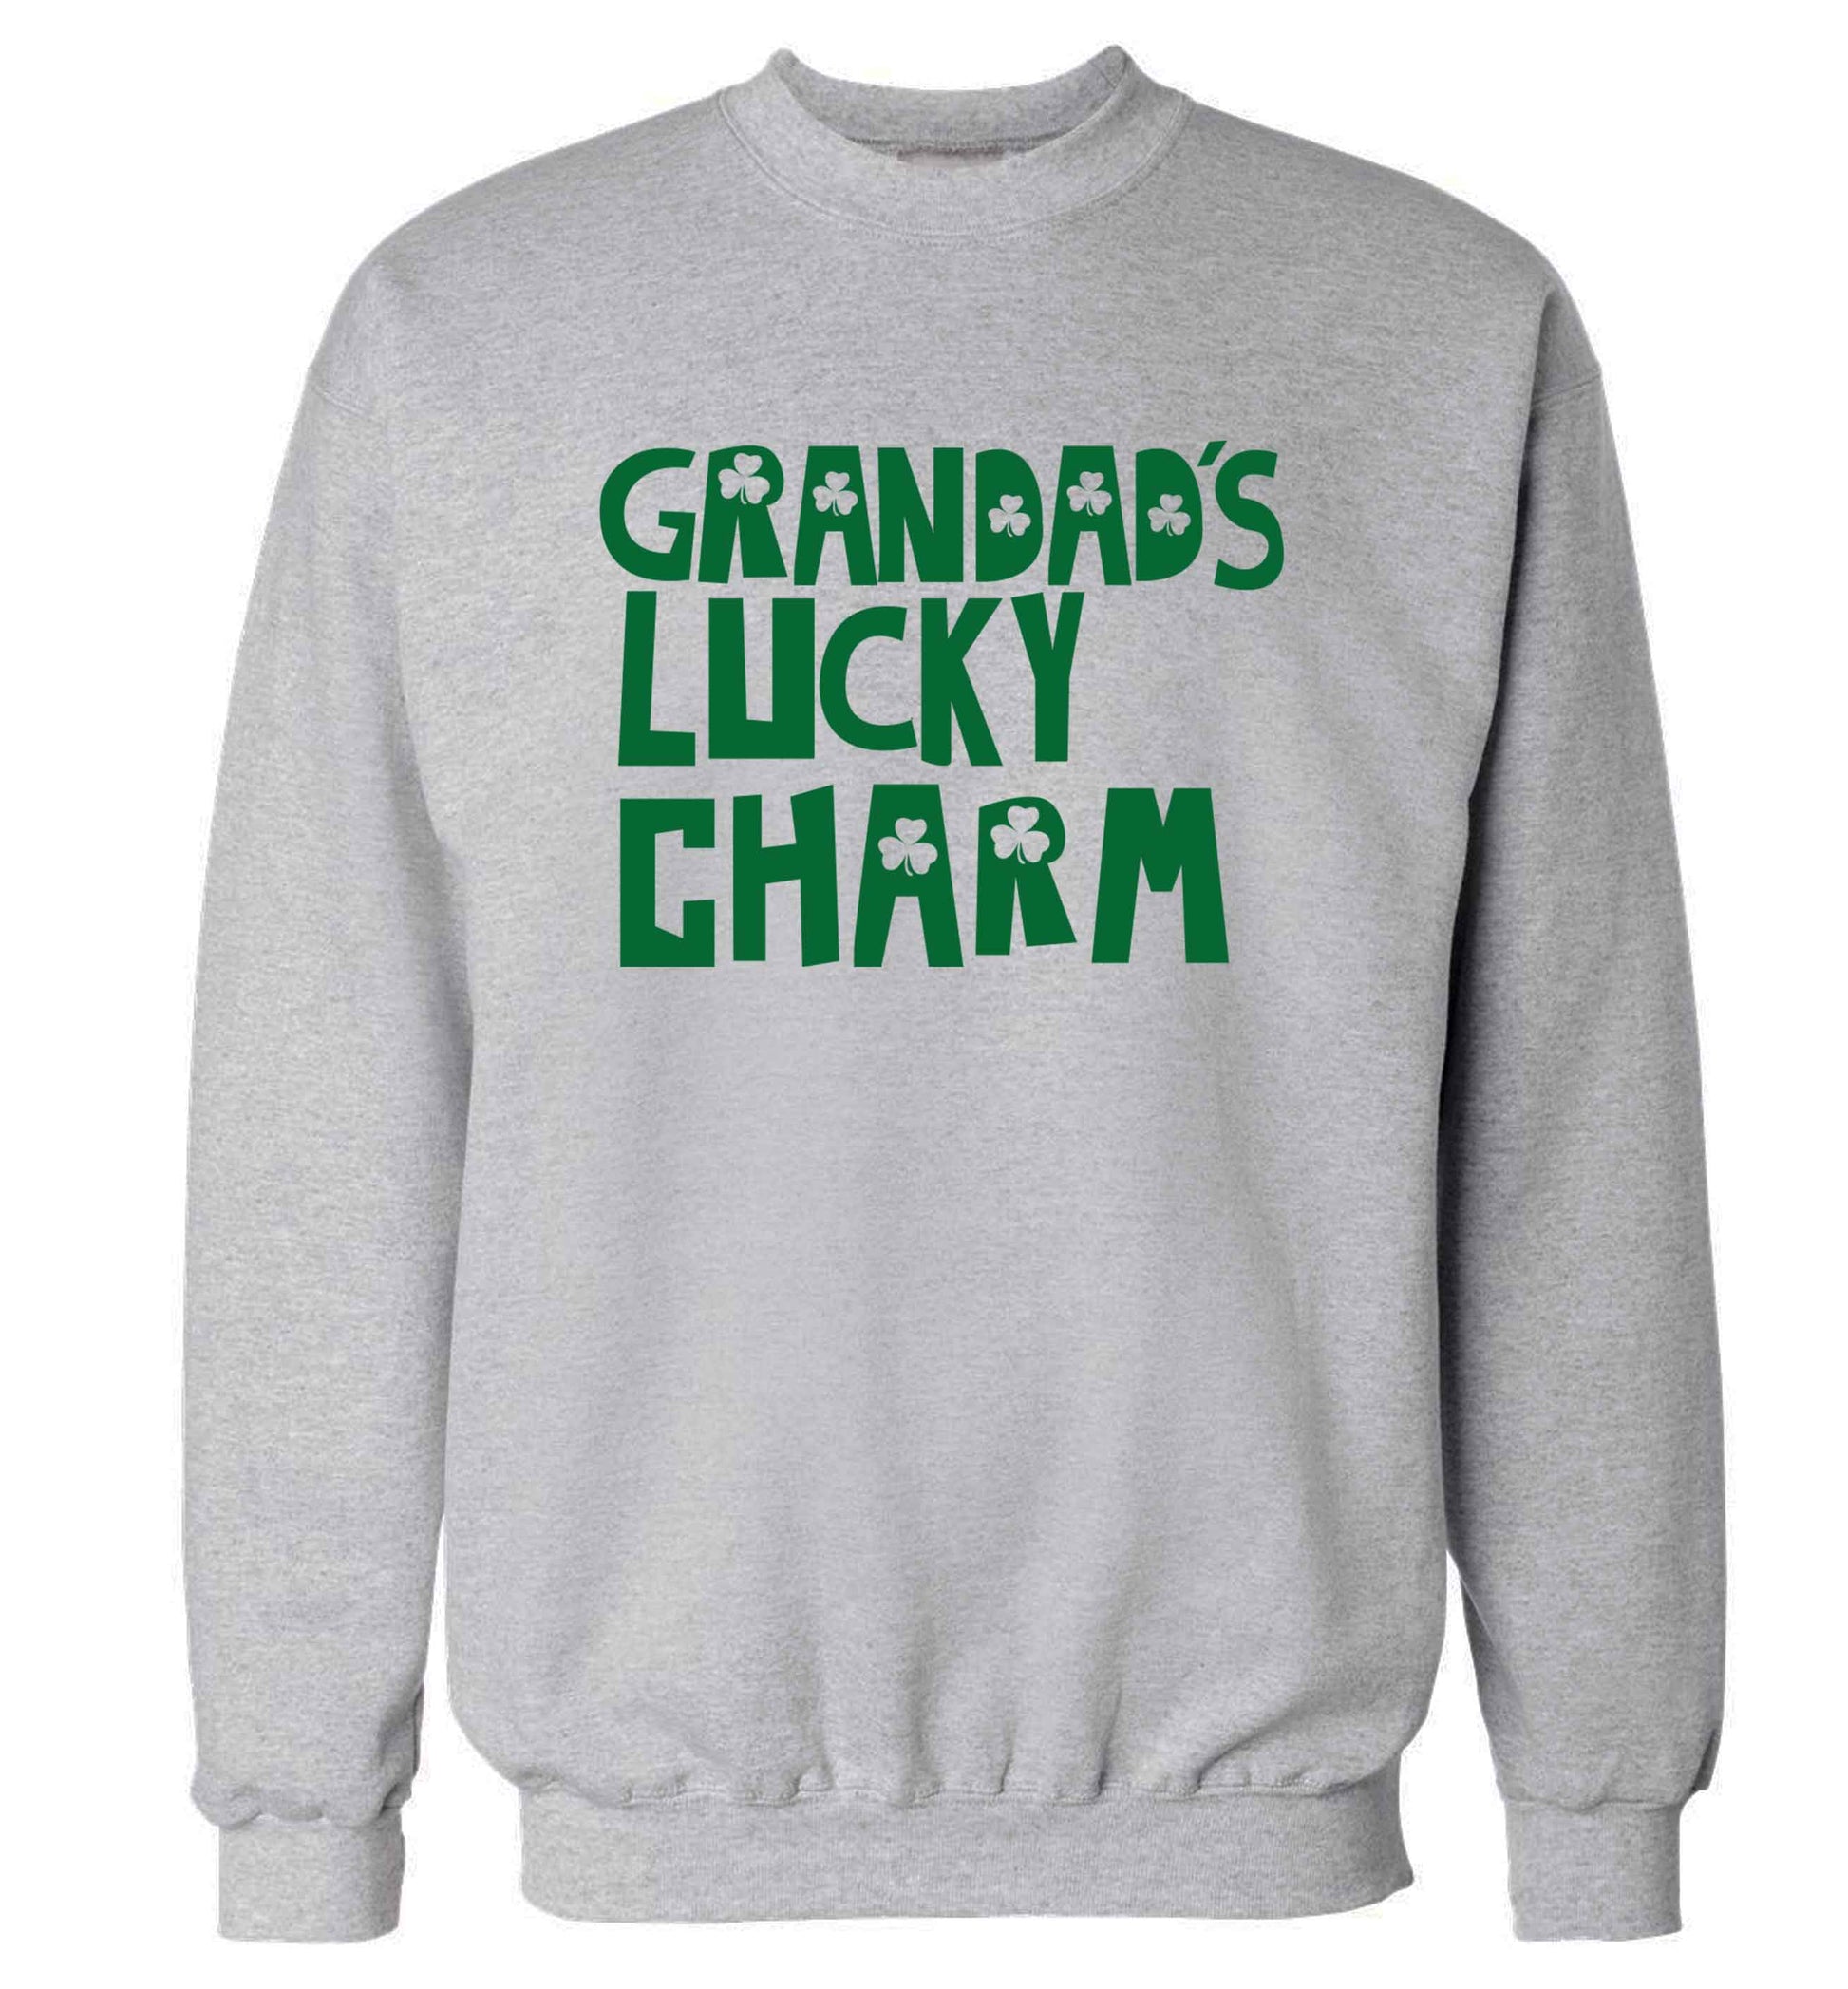 Grandad's lucky charm  adult's unisex grey sweater 2XL